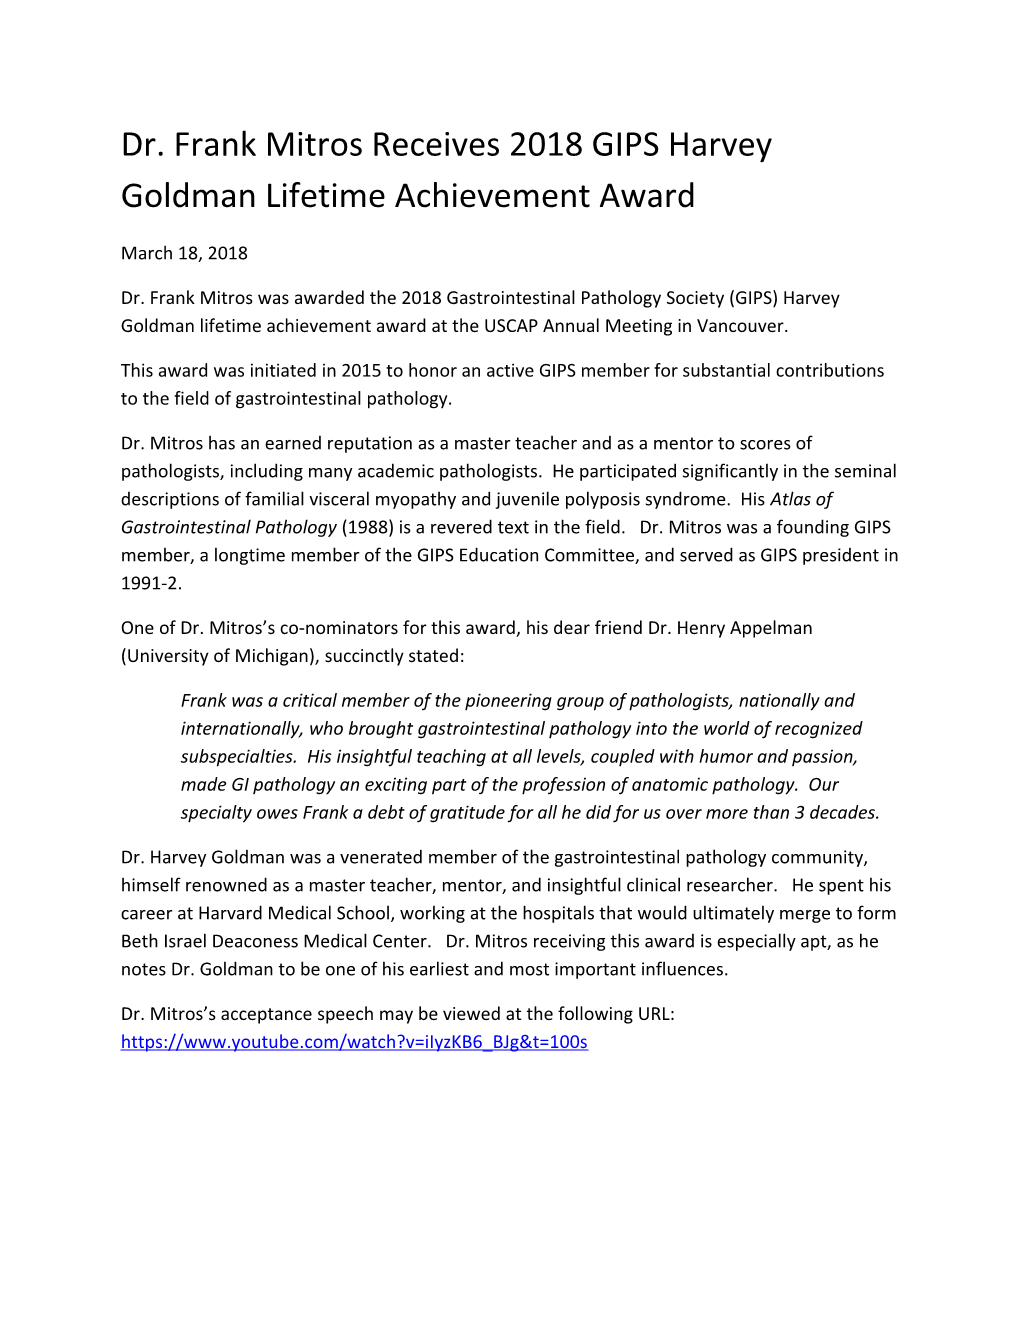 Dr. Frank Mitros Receives 2018 GIPS Harvey Goldman Lifetime Achievement Award